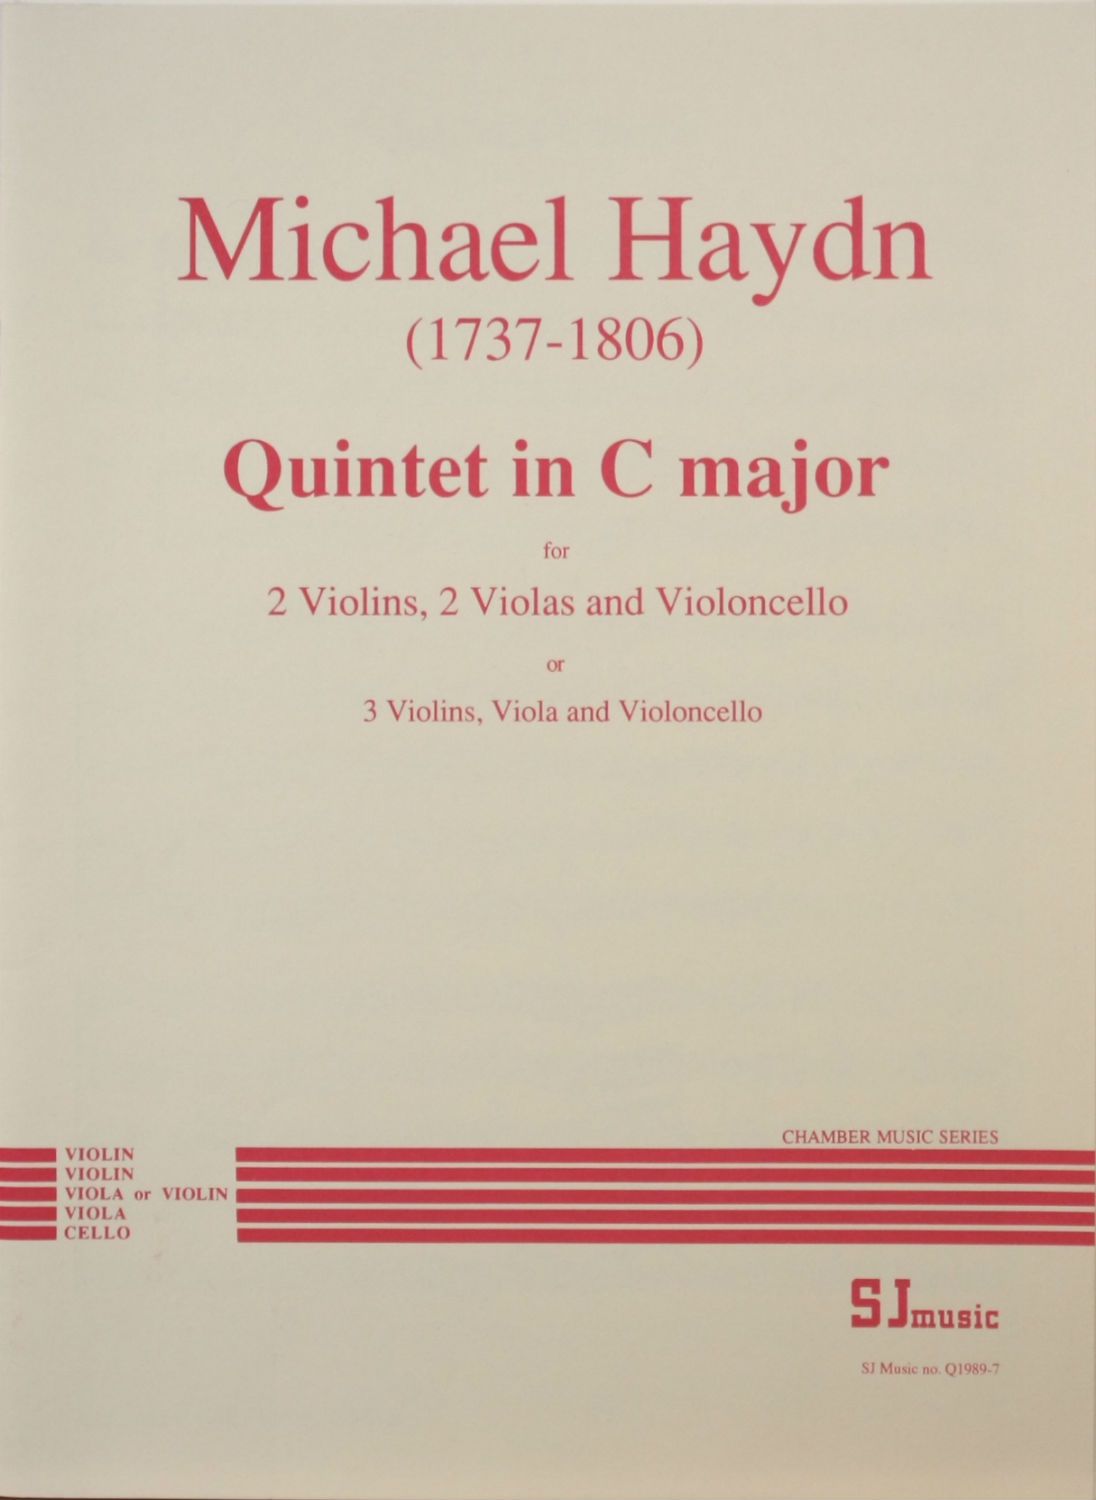 M. Haydn: String Quintet in C Major, MH 187